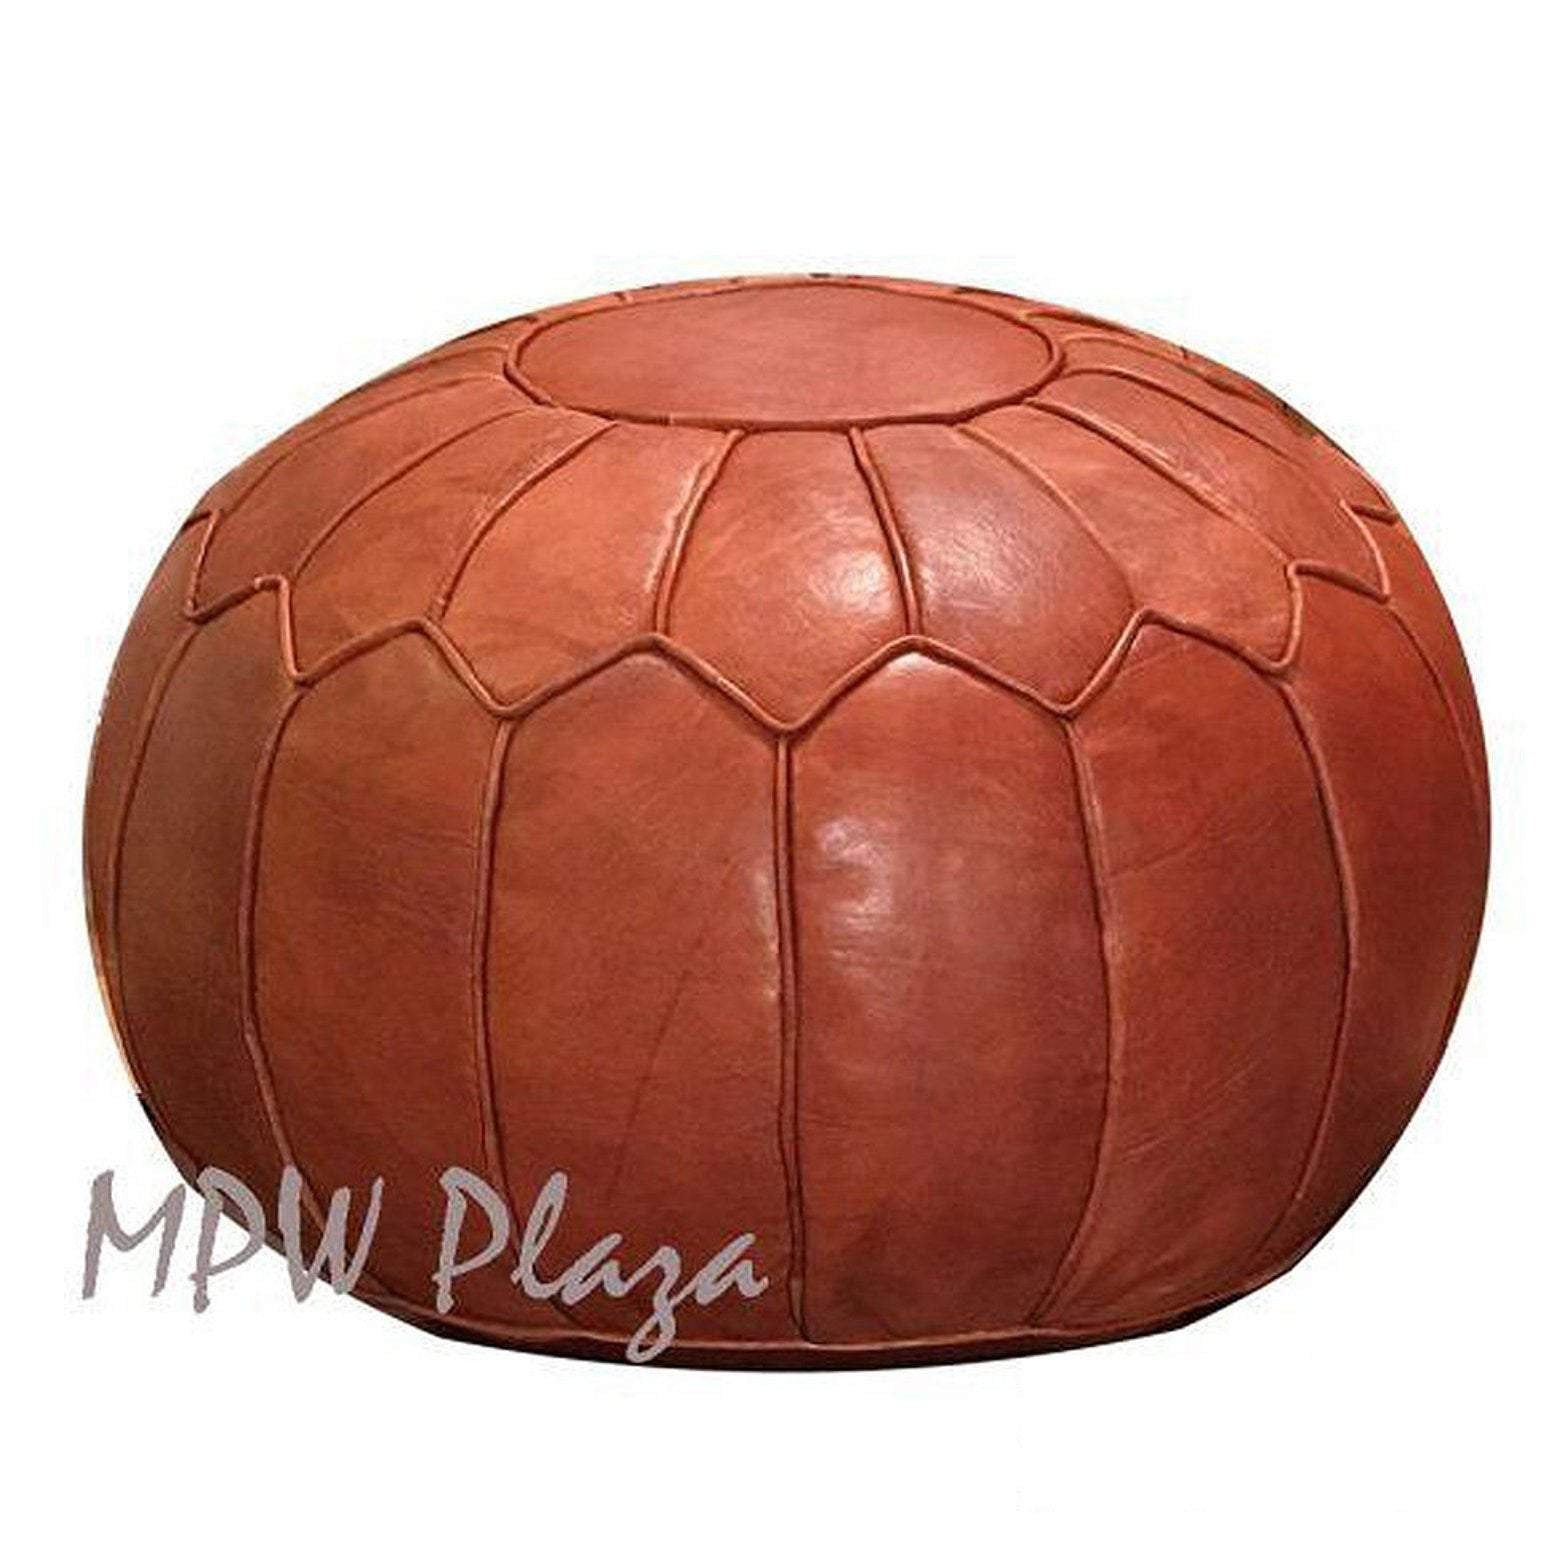 MPW Plaza® Retro Moroccan Pouf Rustic Brown tone 14 x 20 Topshelf Moroccan Leather,  couture ottoman (Stuffed) freeshipping - MPW Plaza®